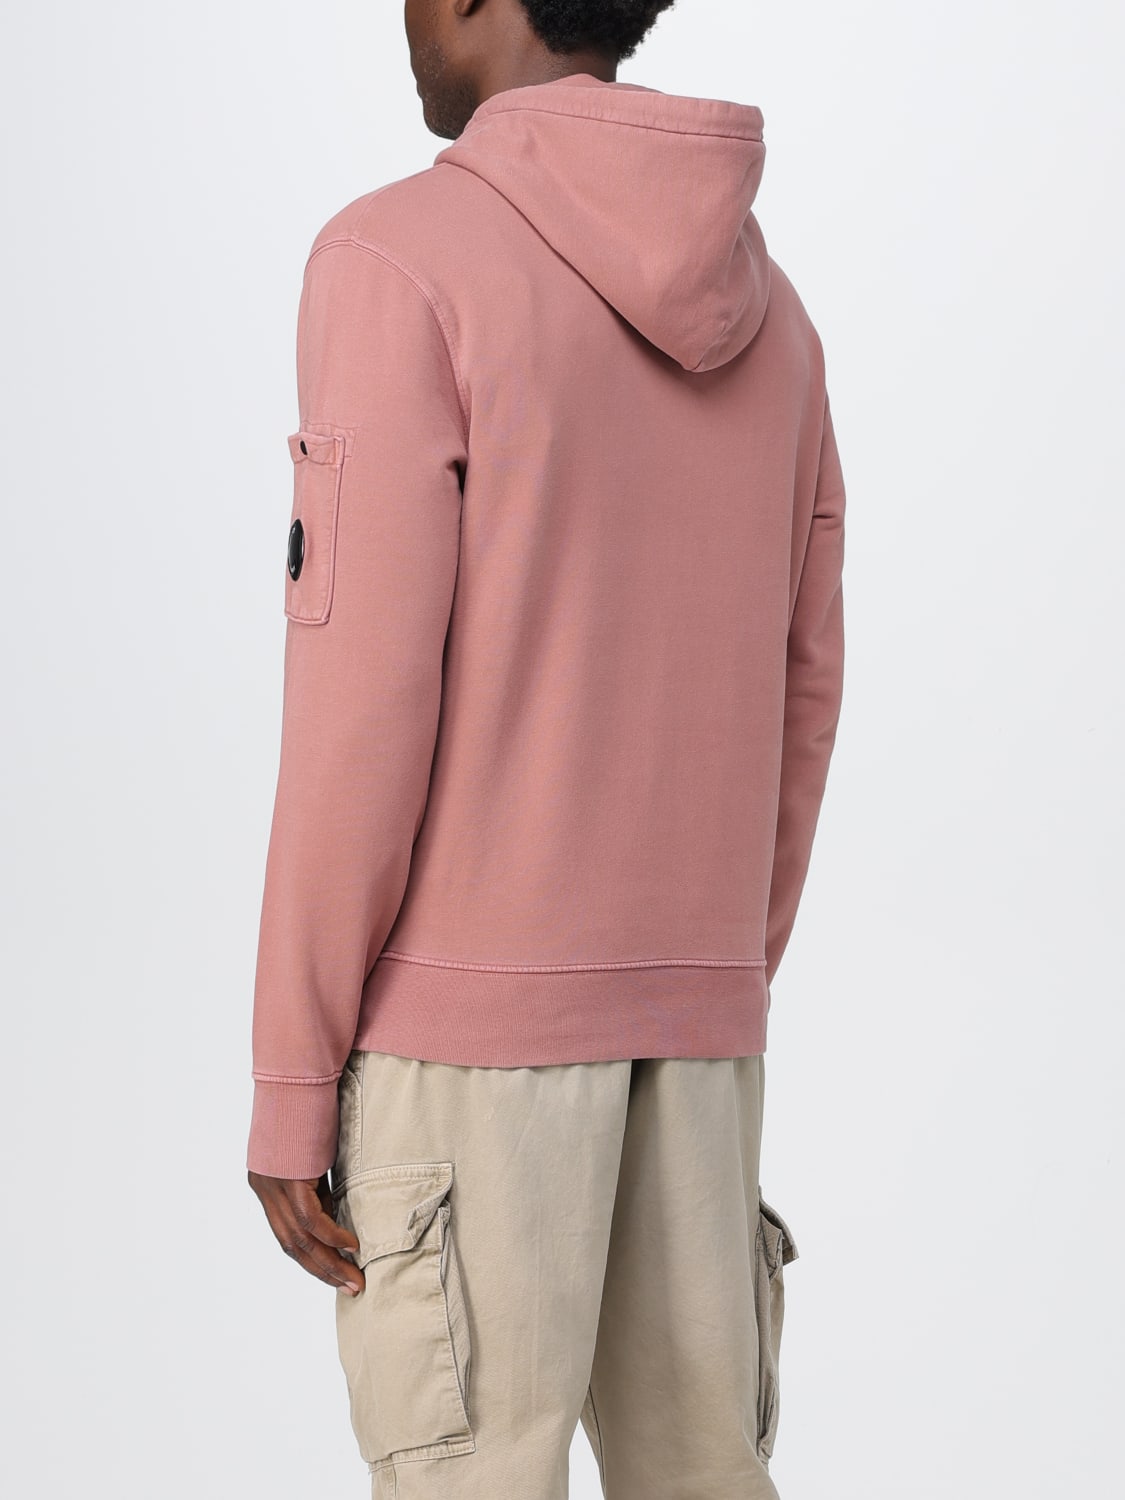 C.P. COMPANY, Blush Men's Sweatshirt